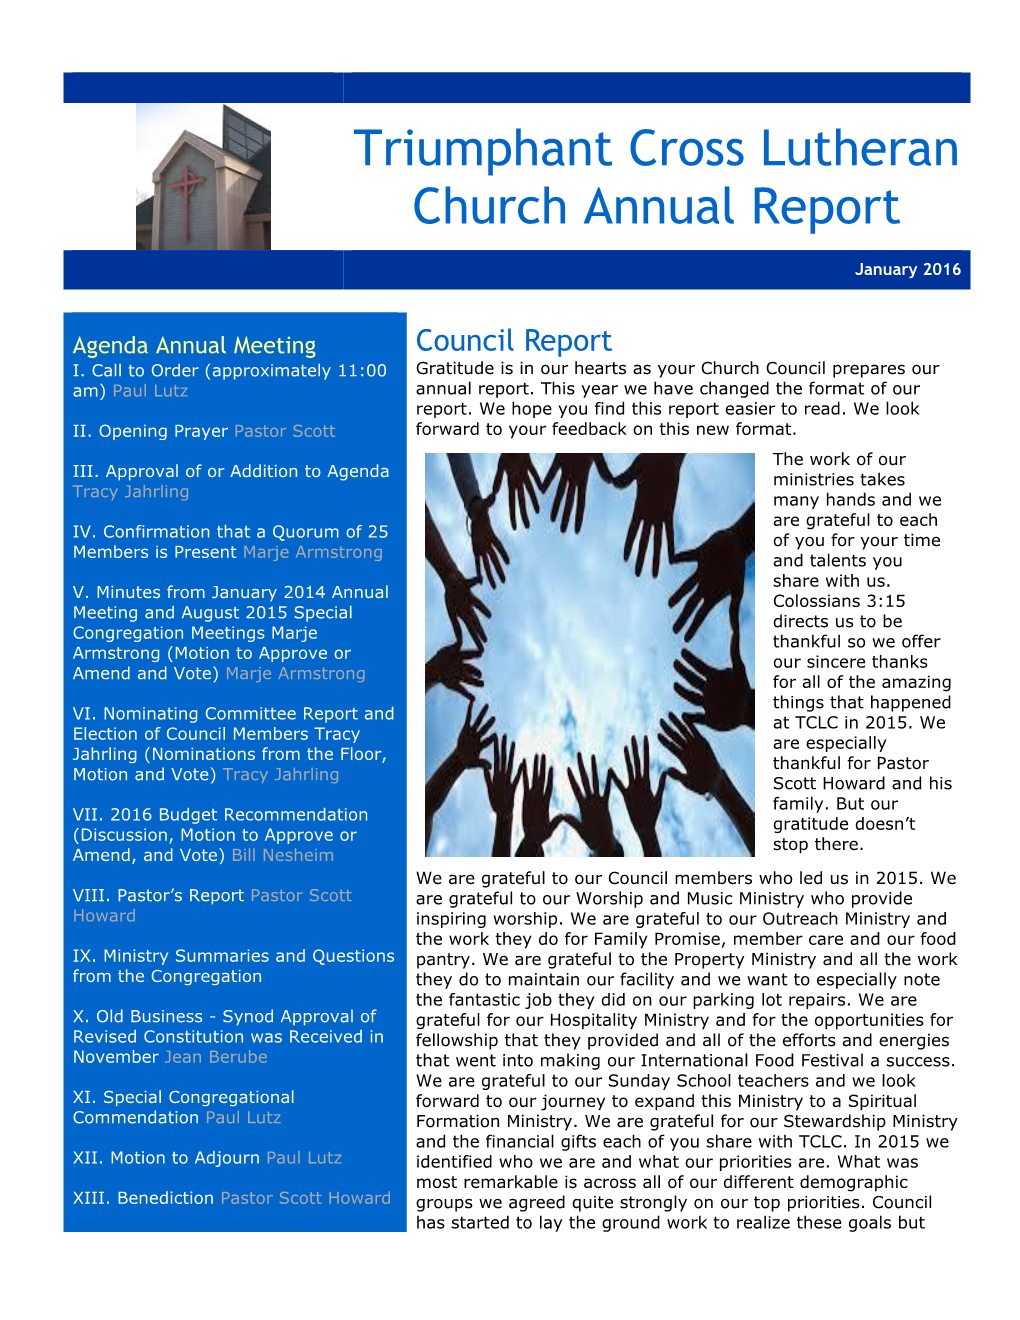 Triumphant Cross Lutheran Church Annual Report